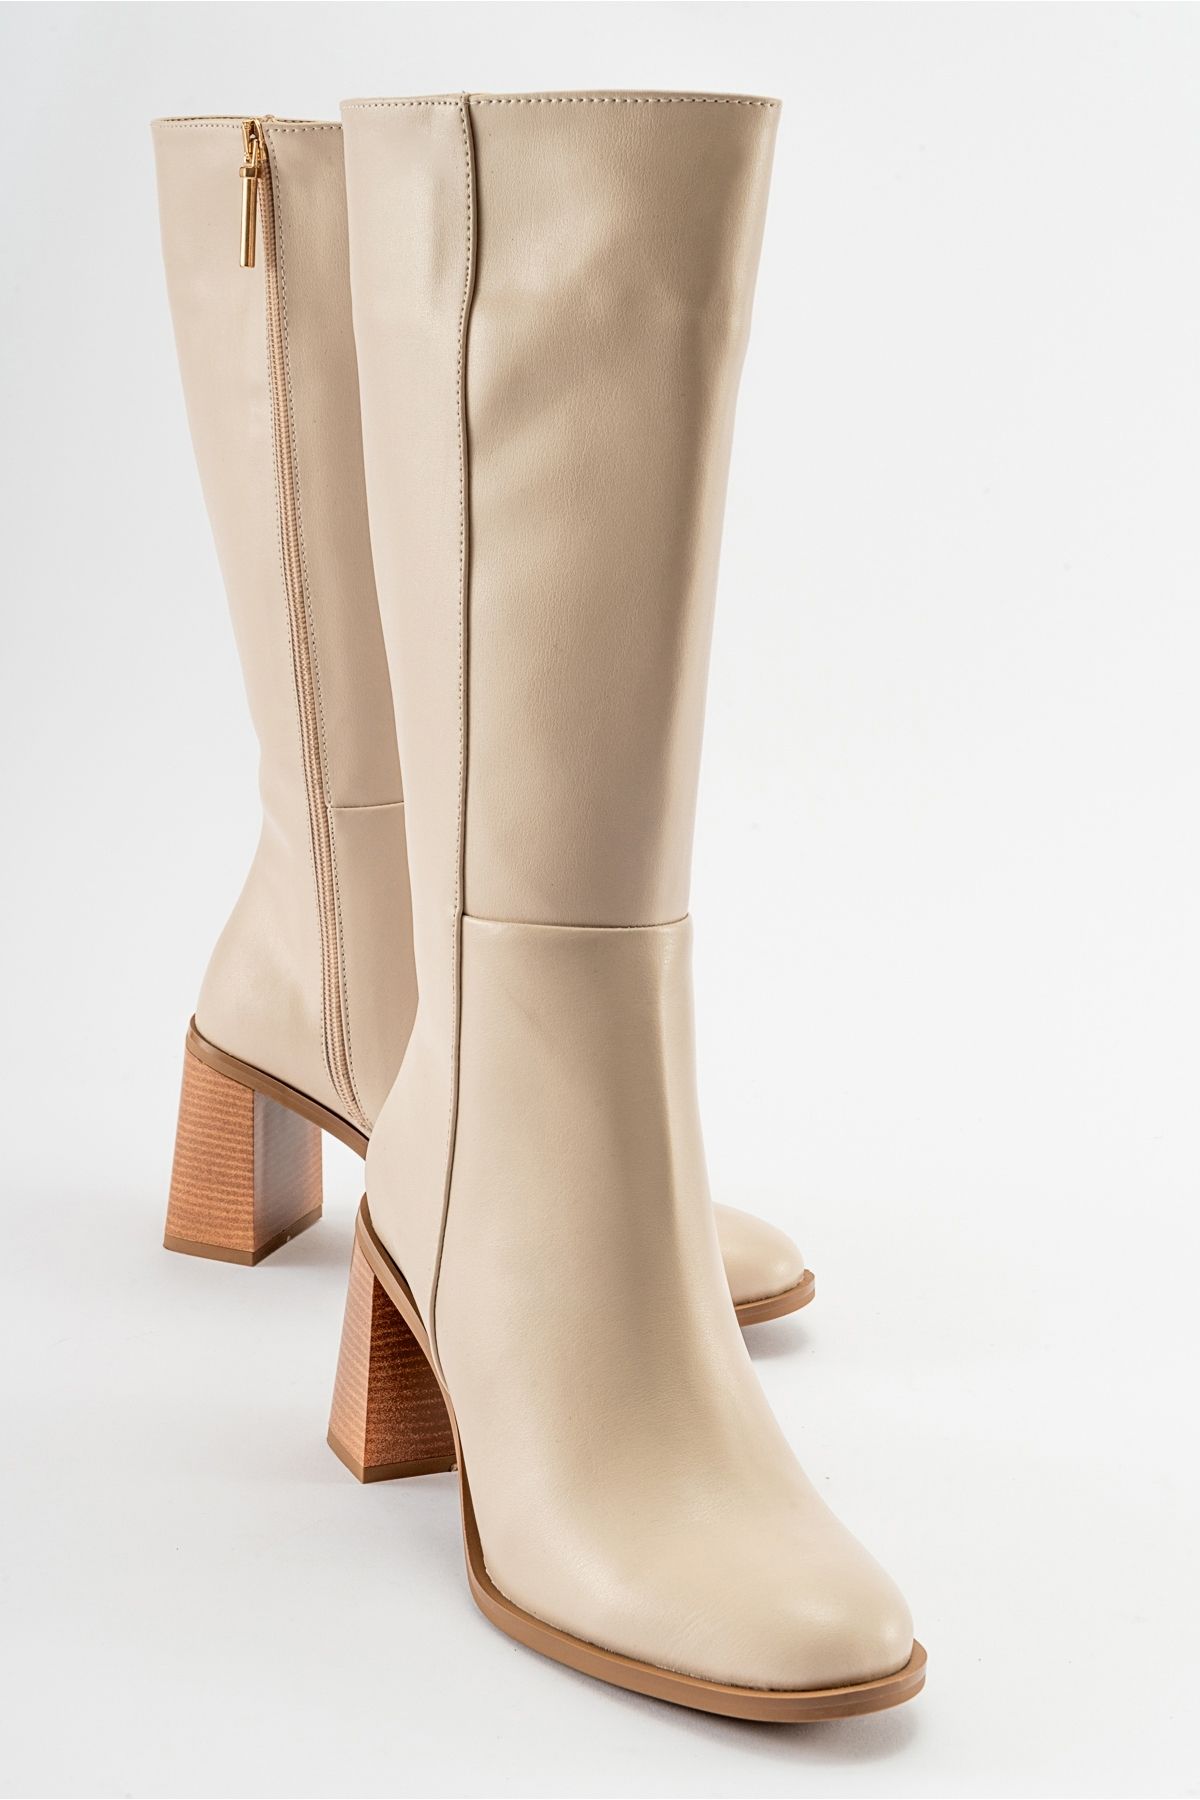 luvishoes MARANTA Bej Cilt Kadın Topuklu Çizme